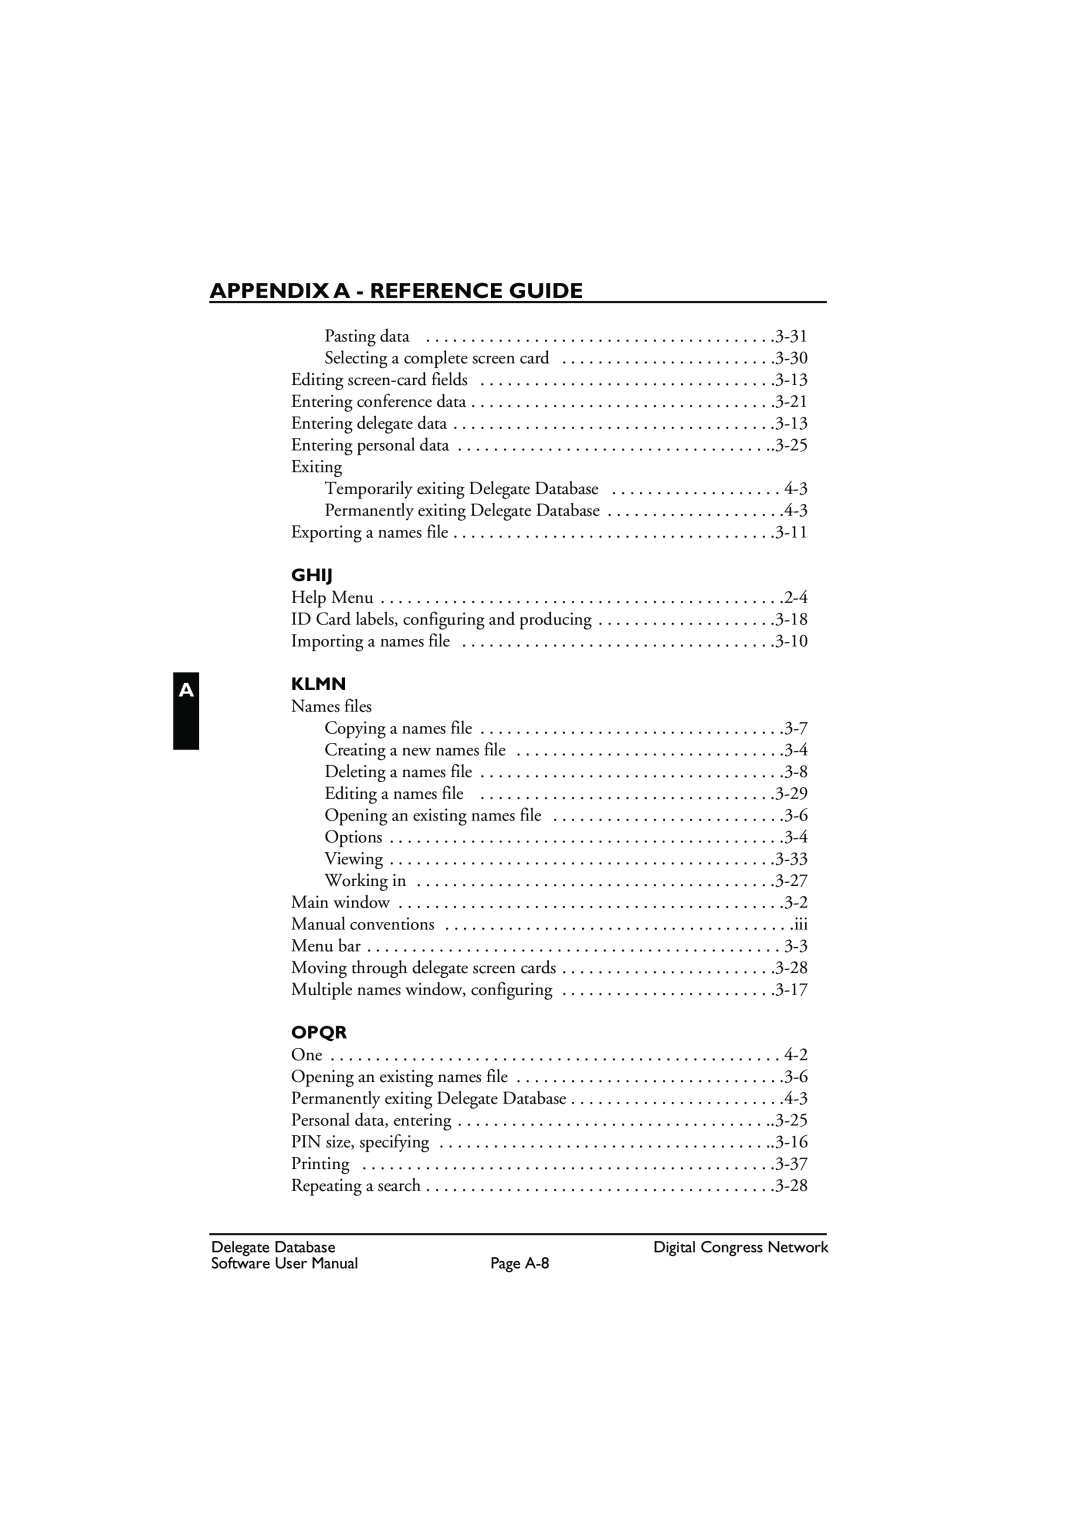 Bosch Appliances LBB3580 user manual Ghij, Aklmn, Opqr, Appendix A - Reference Guide 